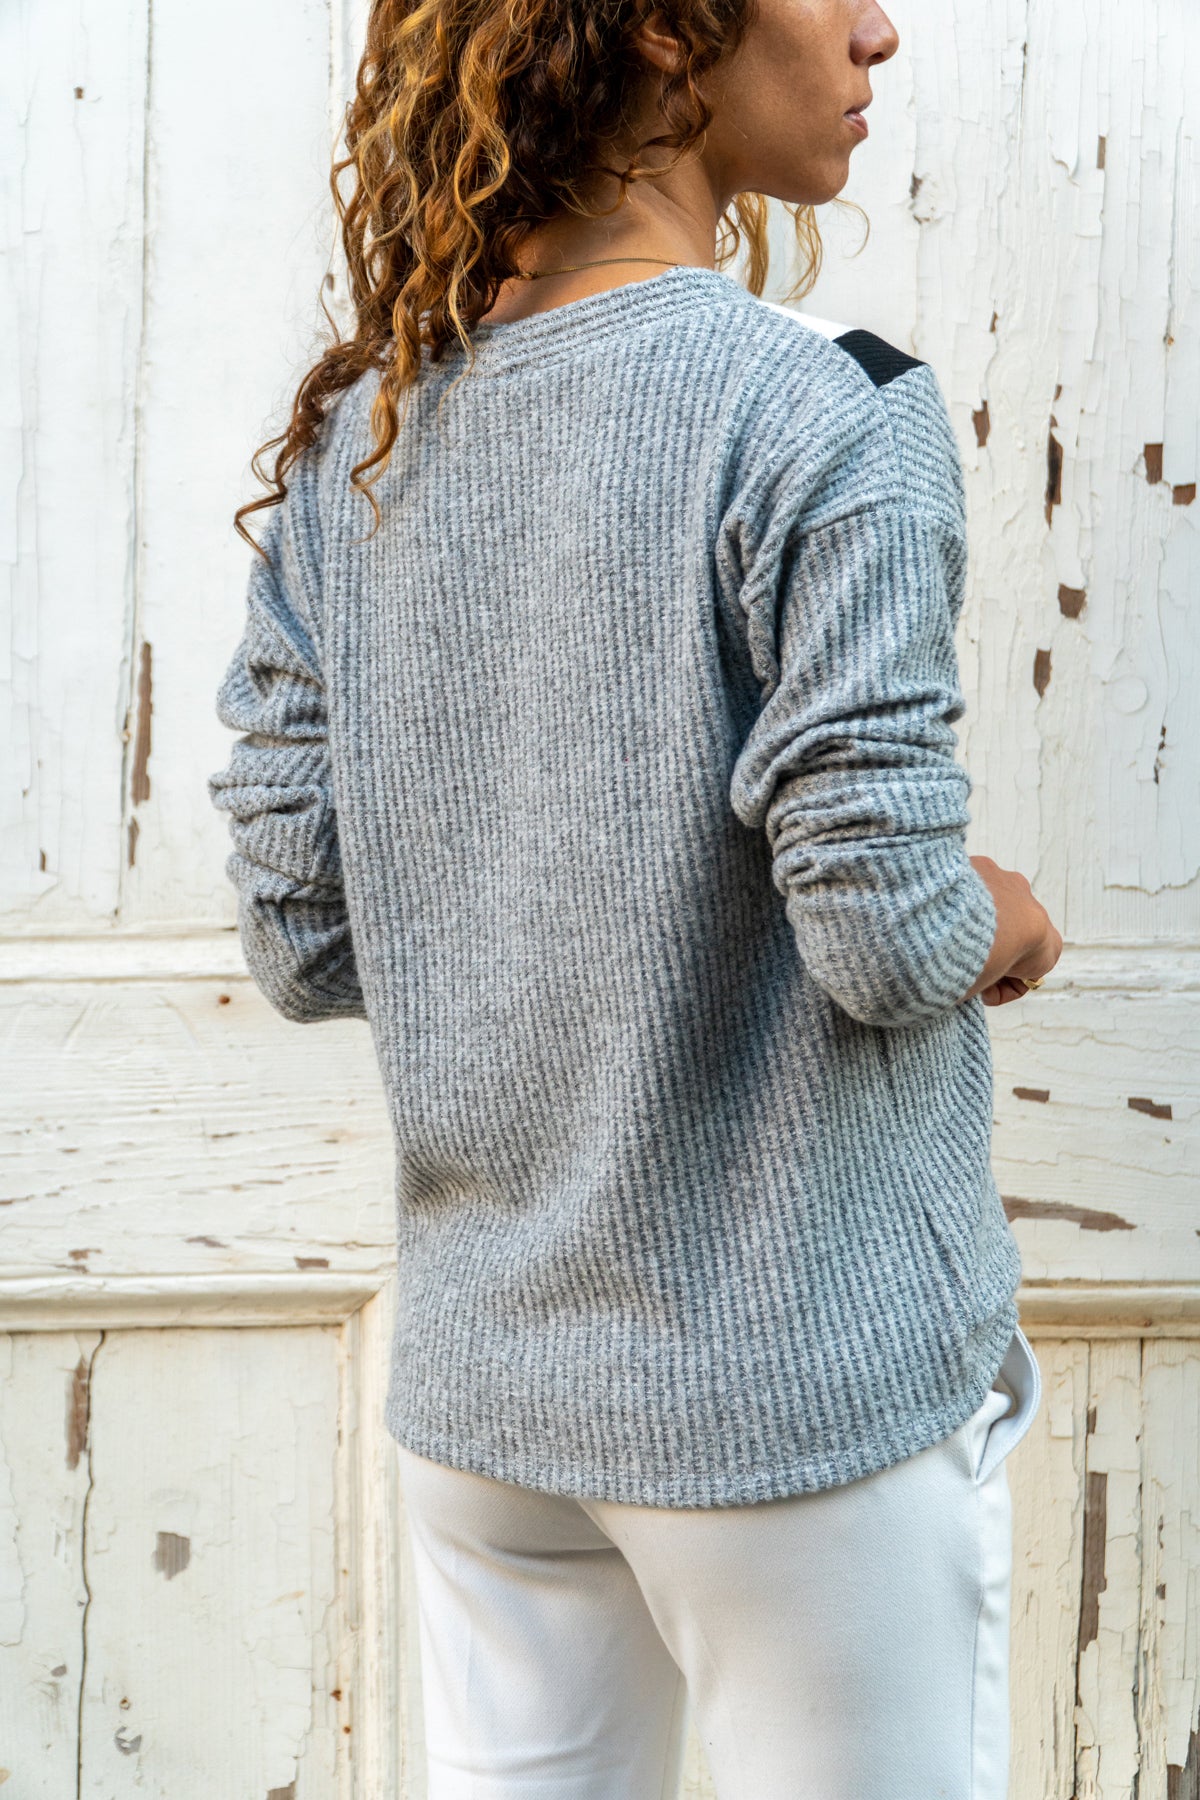 V-neck Grey Women's Blouse, Long Sleeve, Plain Design, Textured Detail, 50% Cotton 50% Acrylic, Stylish & Comfy